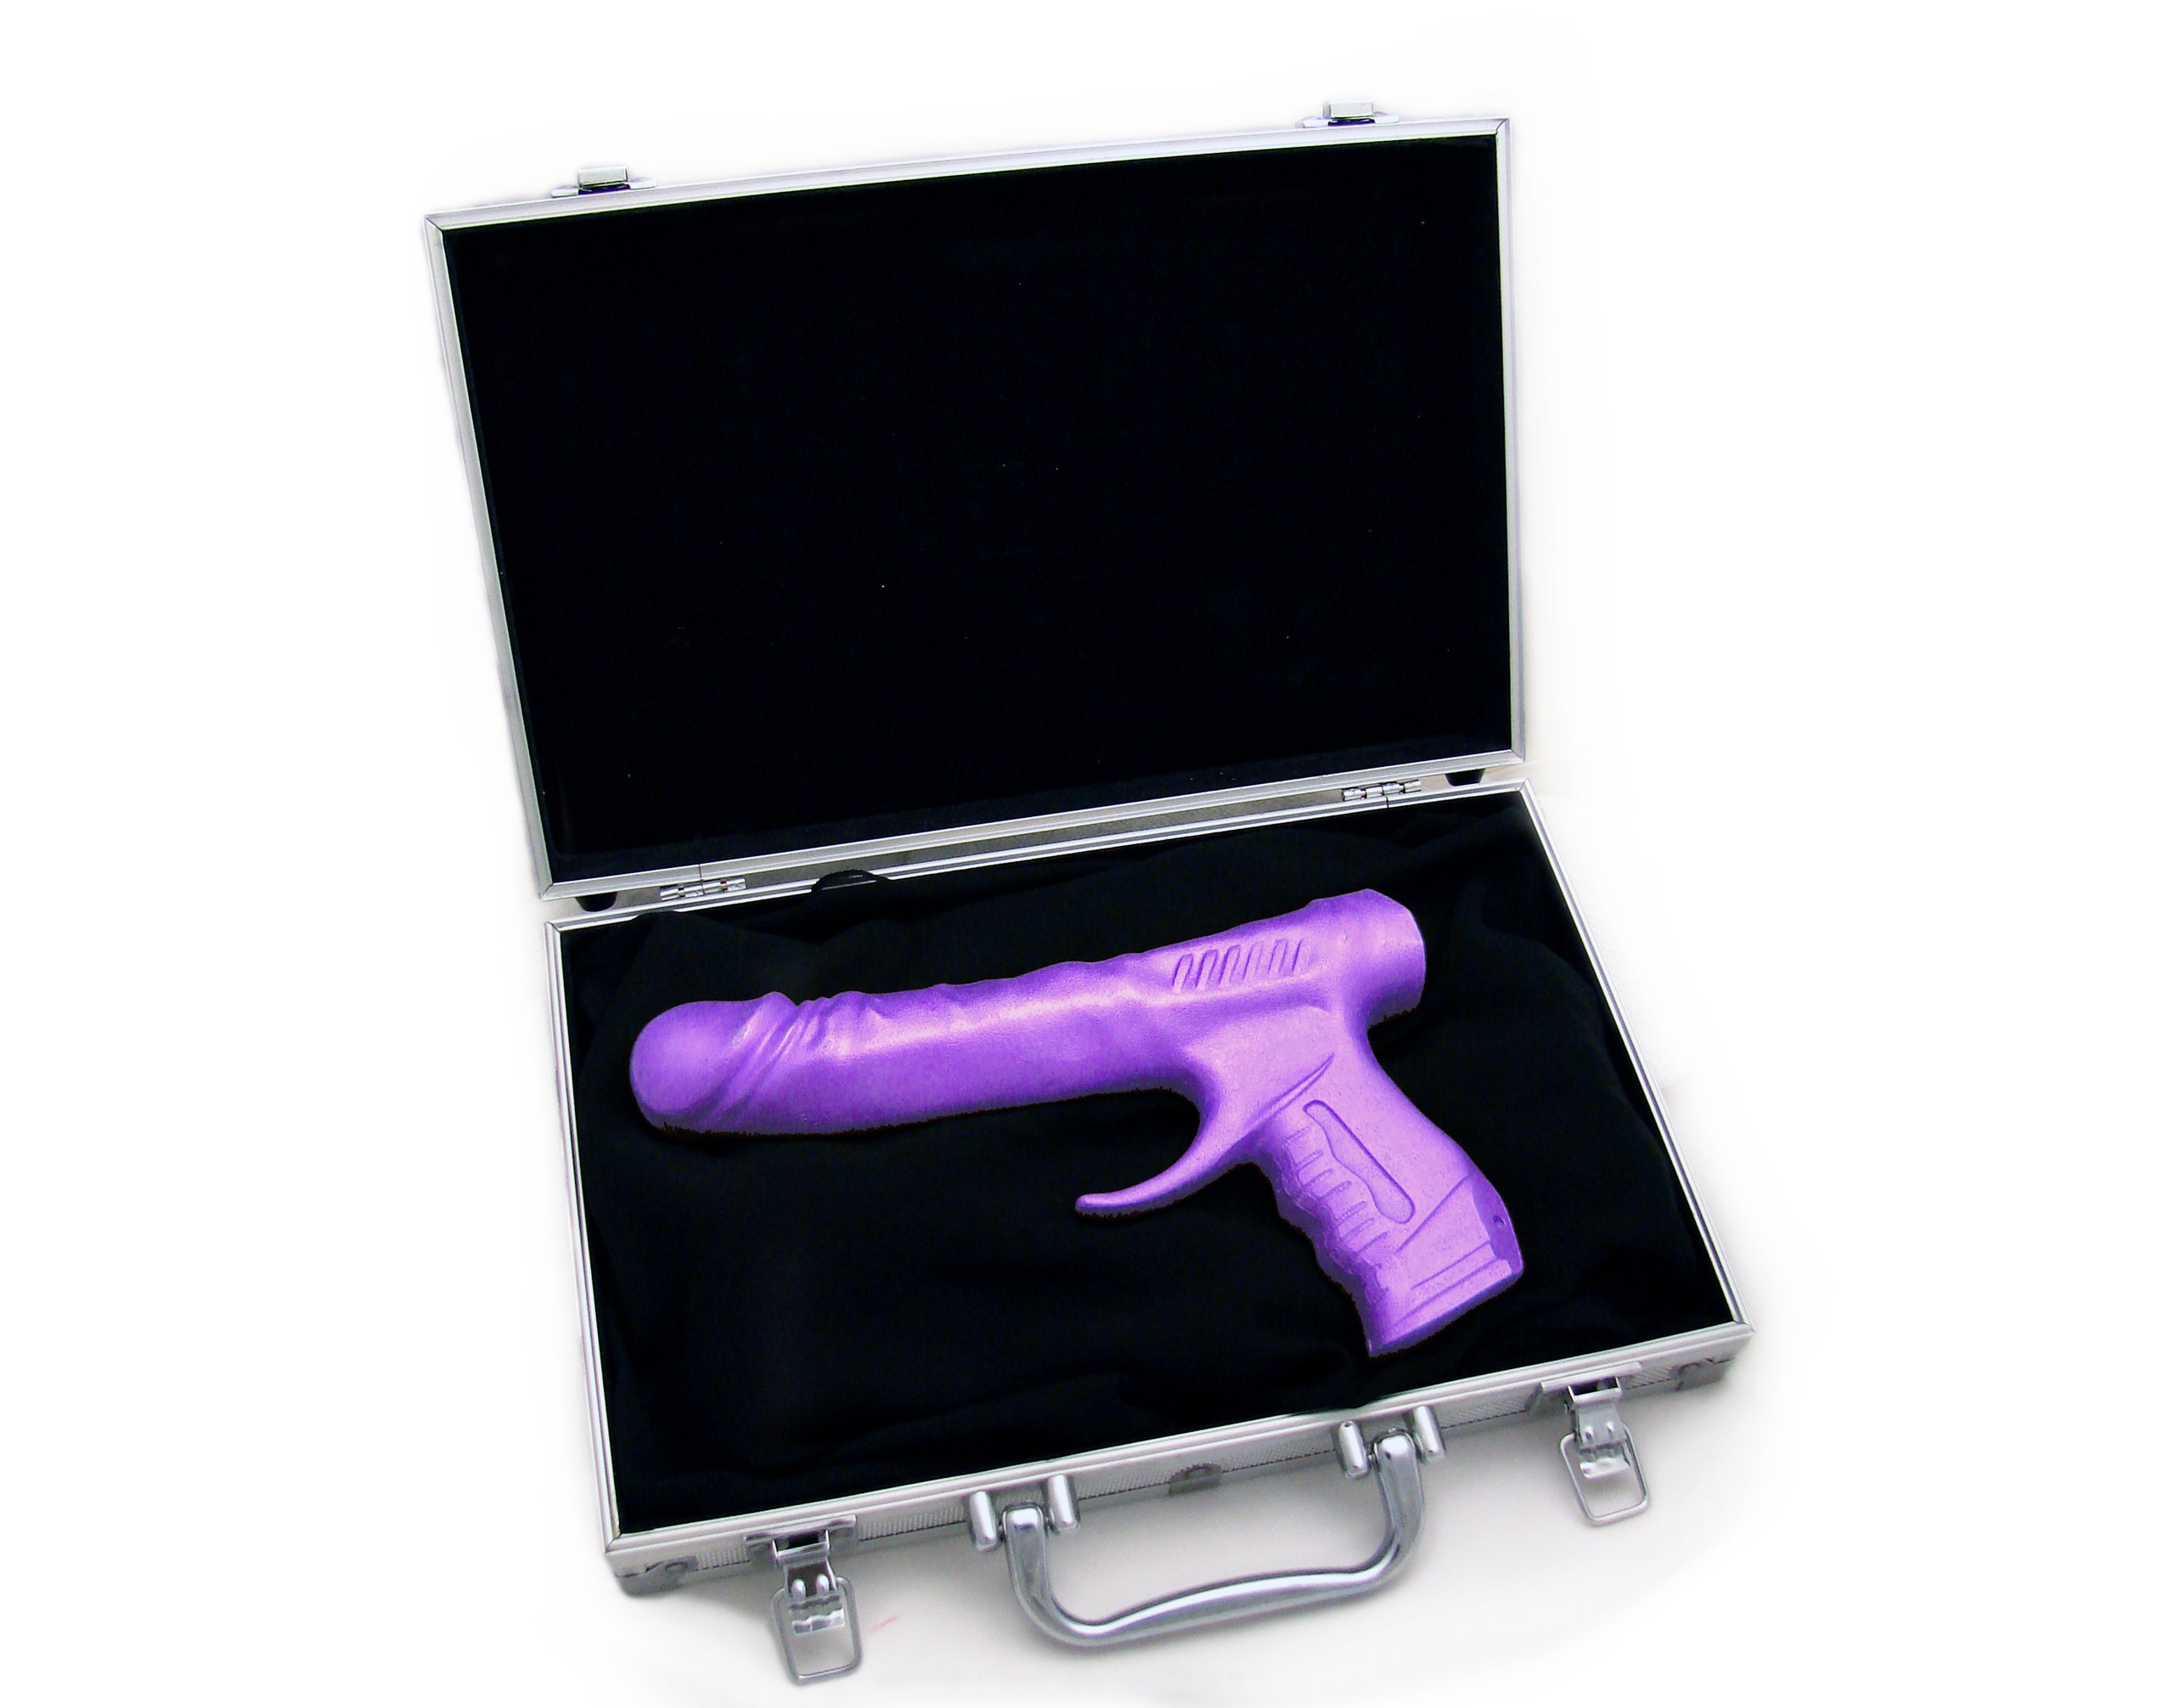 The violet nikita gun shaped dildo in it's sleek case